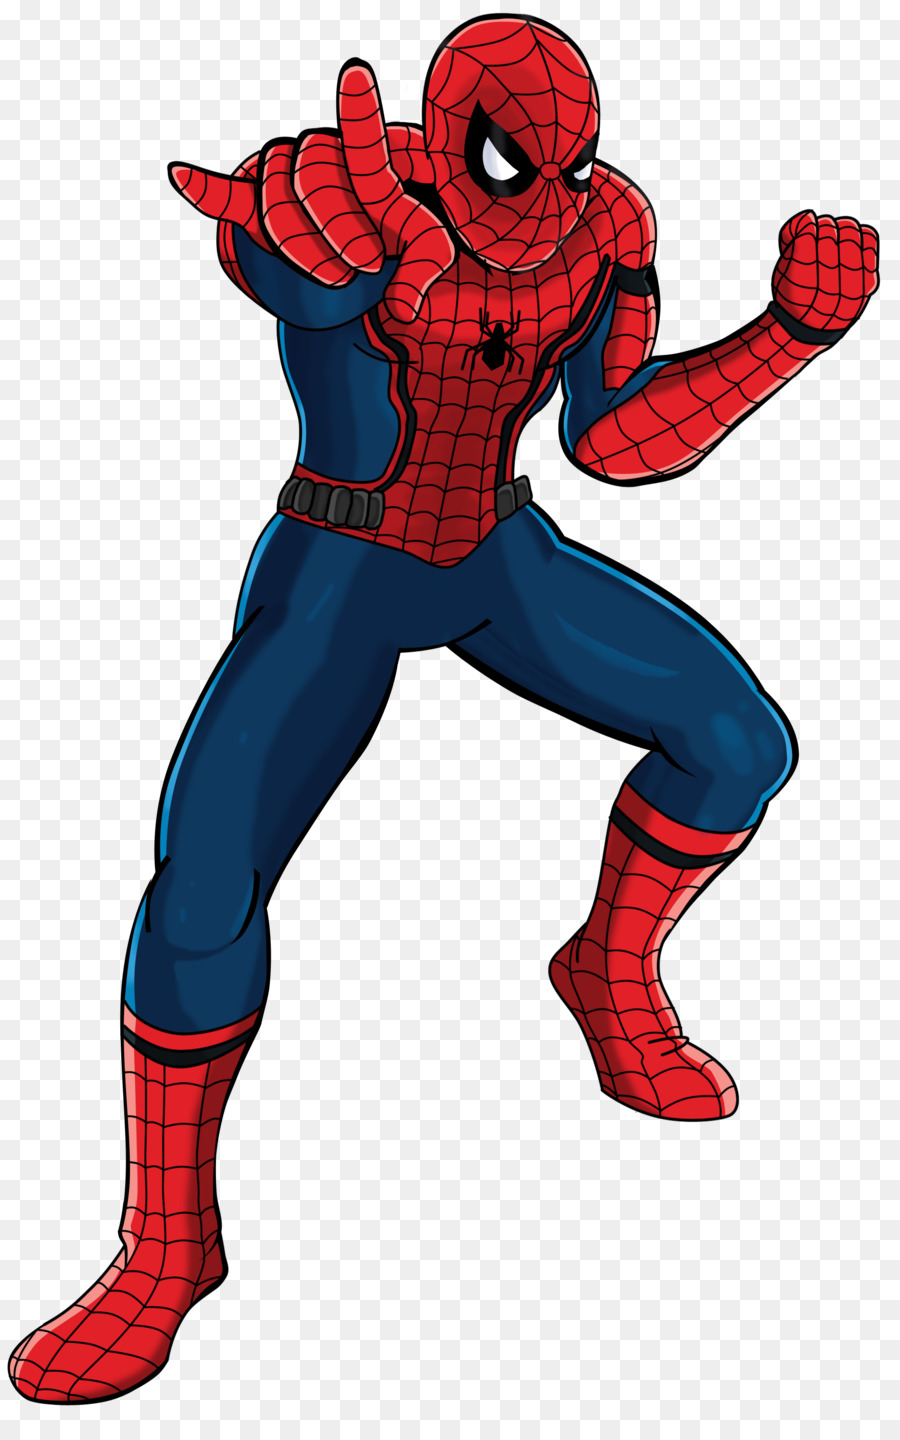 Spider-Man Captain America Black Widow Marvel Cinematic Universe Art - spiderman png download - 1892*3010 - Free Transparent Spiderman png Download.